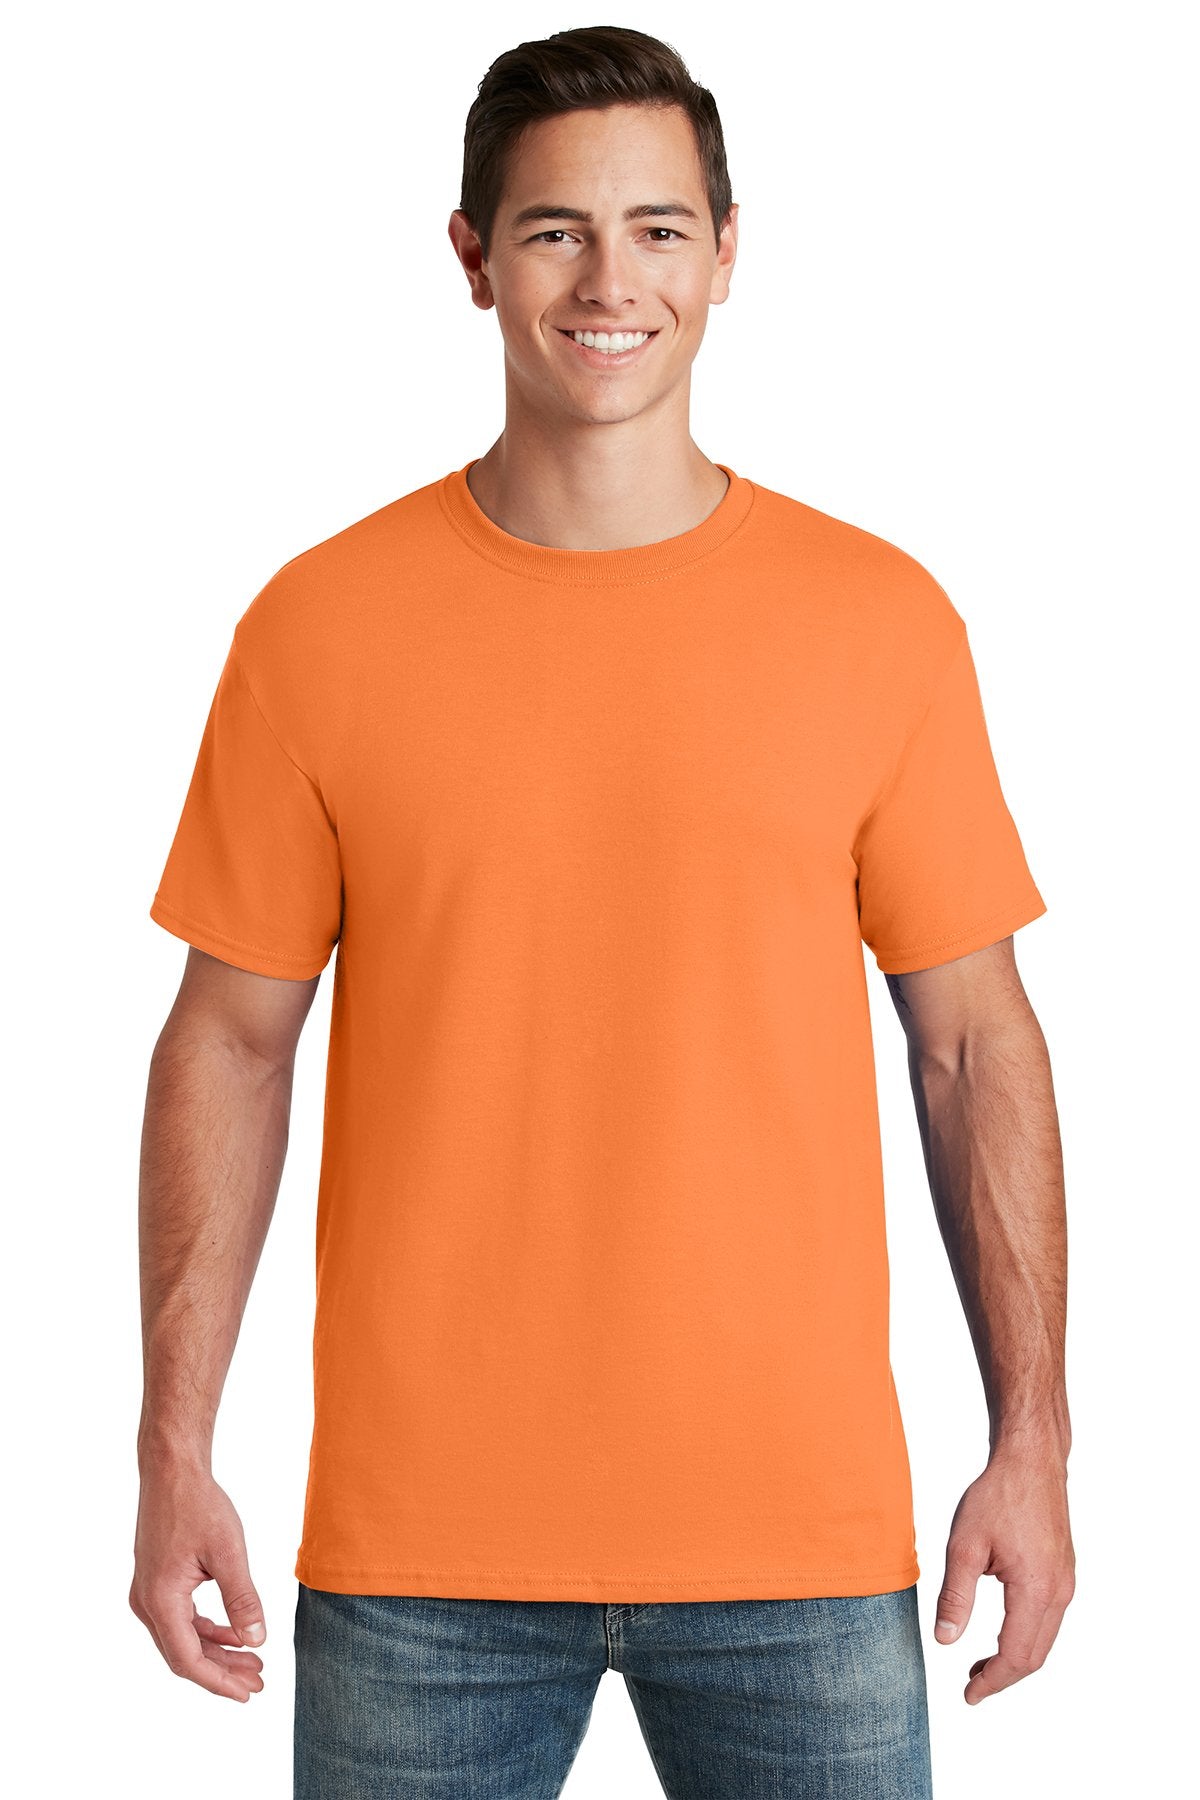 jerzees dri-power active 50/50 cotton/poly t-shirt 29m safety orange